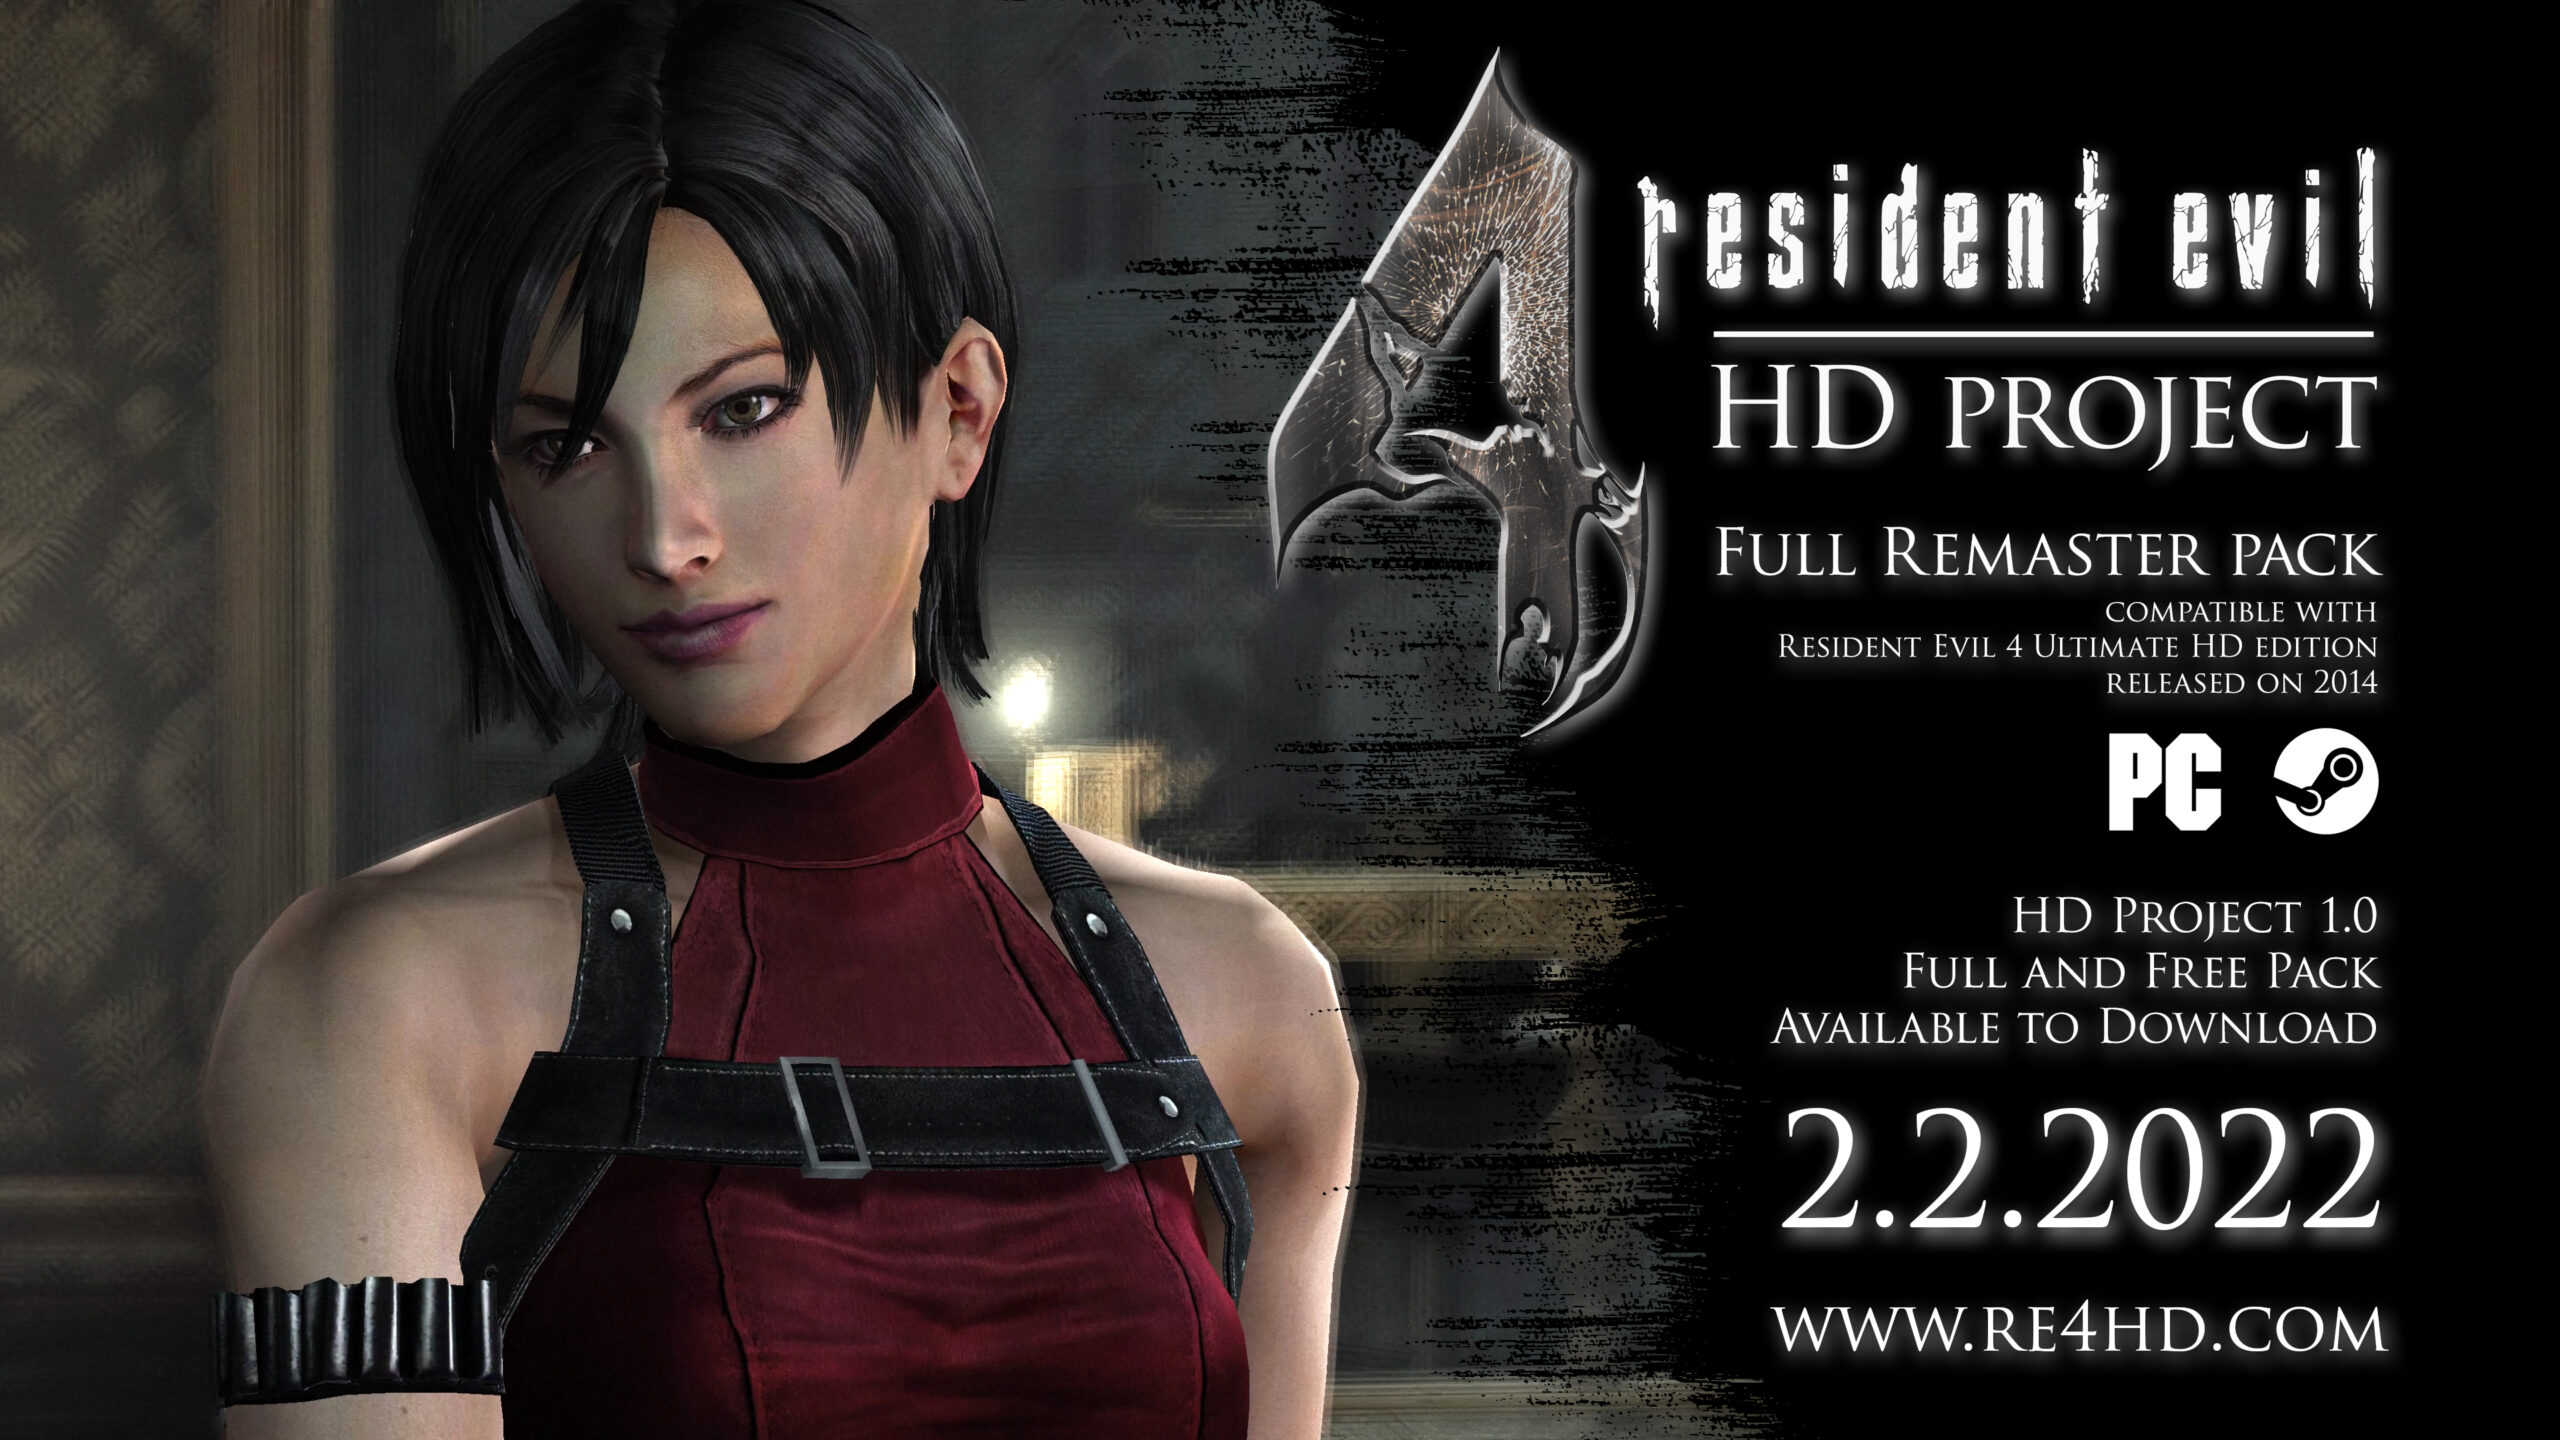 Resident Evil 4: Remake - Ada black Widow (PC Mod) Gameplay